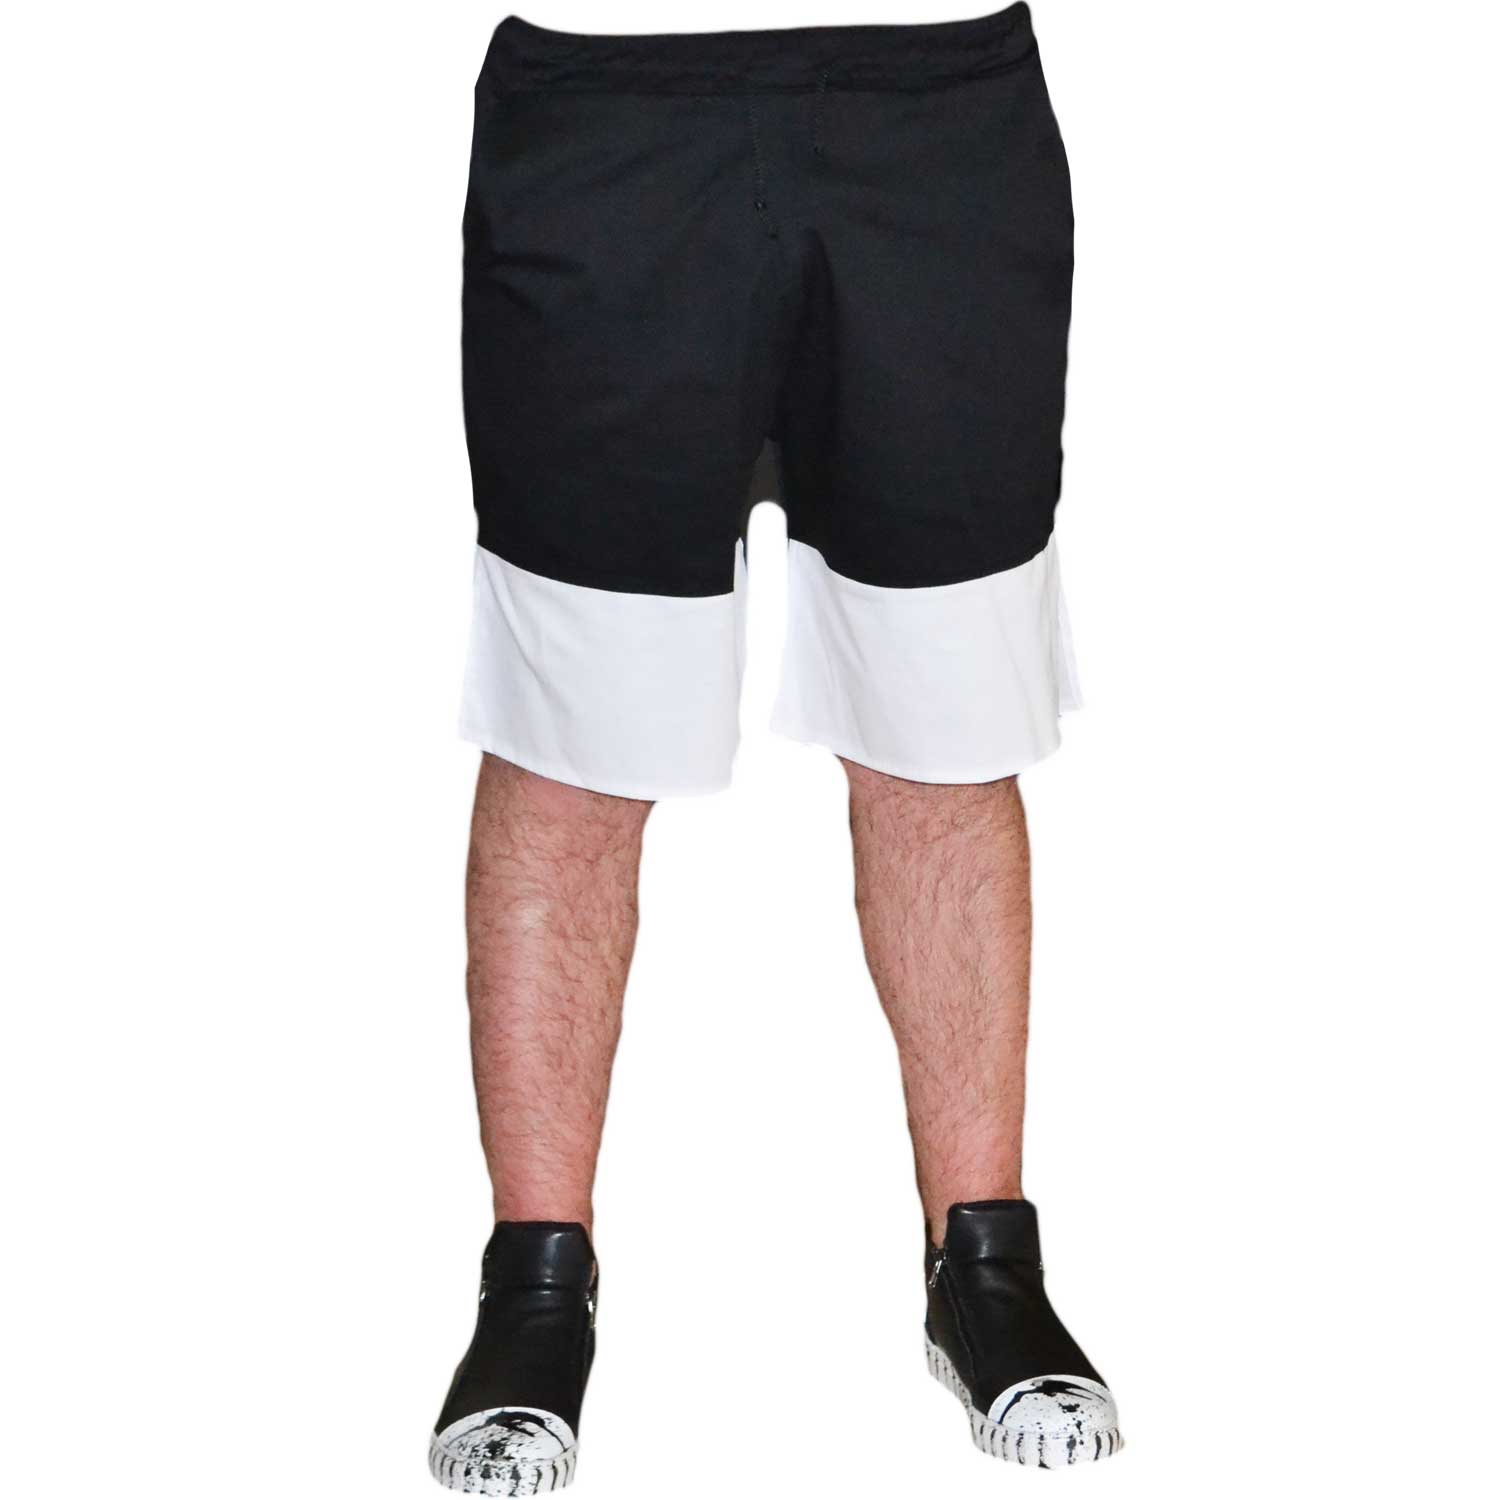 Abbigliamento Uomo Pantaloni Corti Shorts Nero Bianco uomo shorts Acy ...